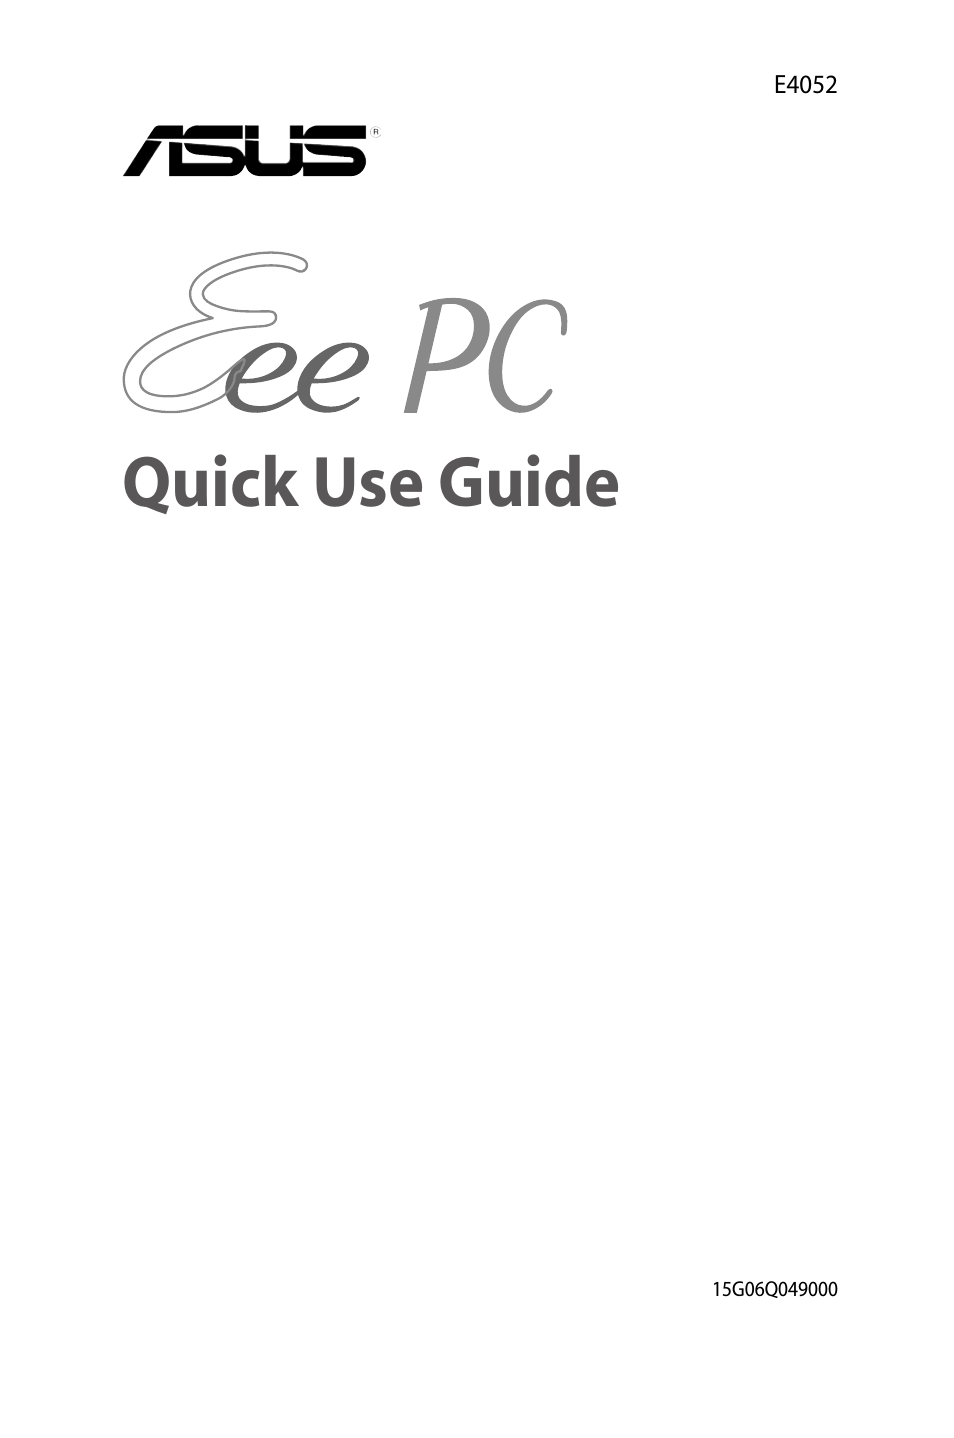 Eee PC S101/Linux